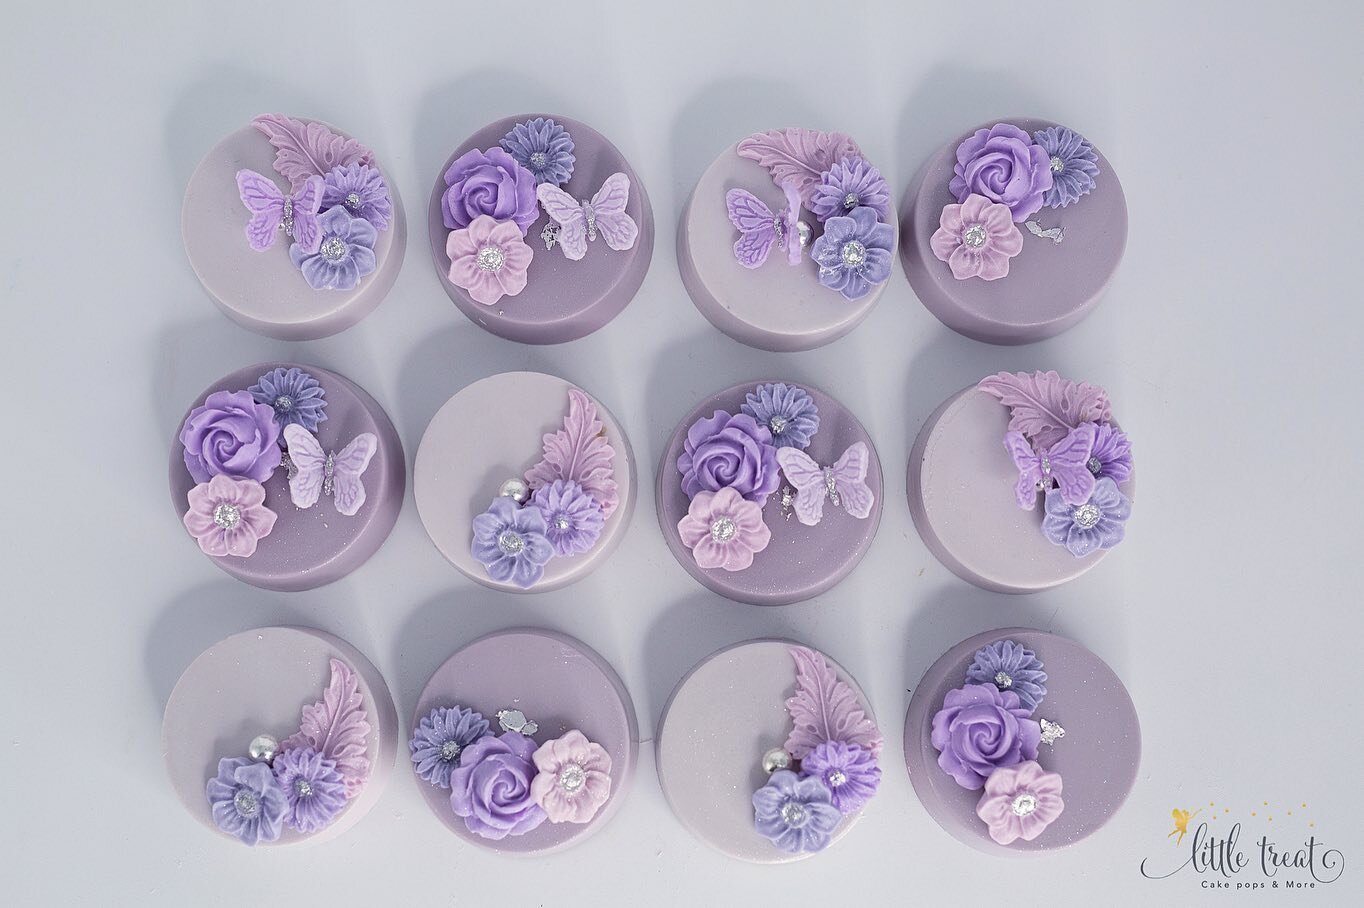 💜✨
.
.
#cakepops #oreos #treats  #flowercakepops #birthday #purplecakepops #instacakepops #30thbirthdayparty #sweet #desserts #cupcakes #sweettooth #event #party #desserttable #beautifultreats